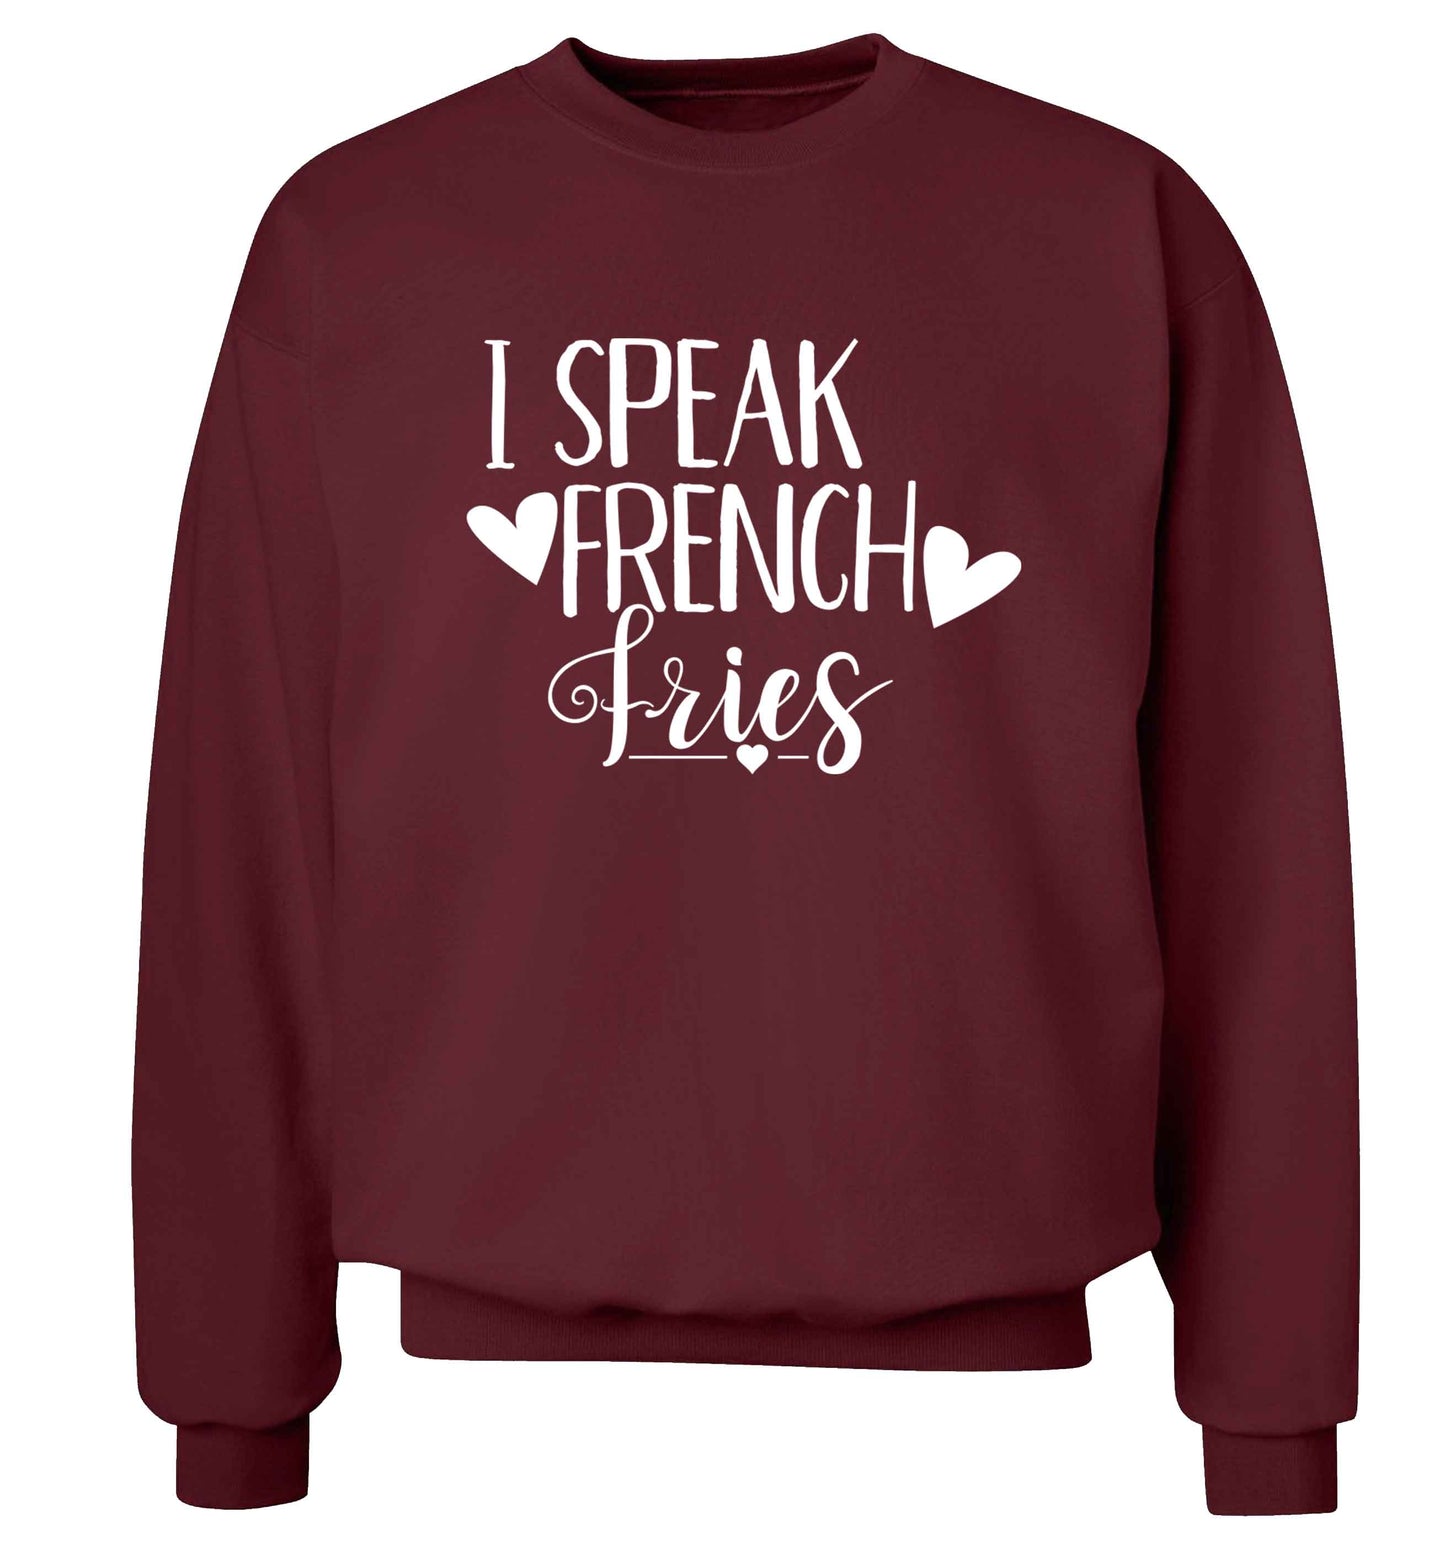 I speak French fries Adult's unisex maroon Sweater 2XL